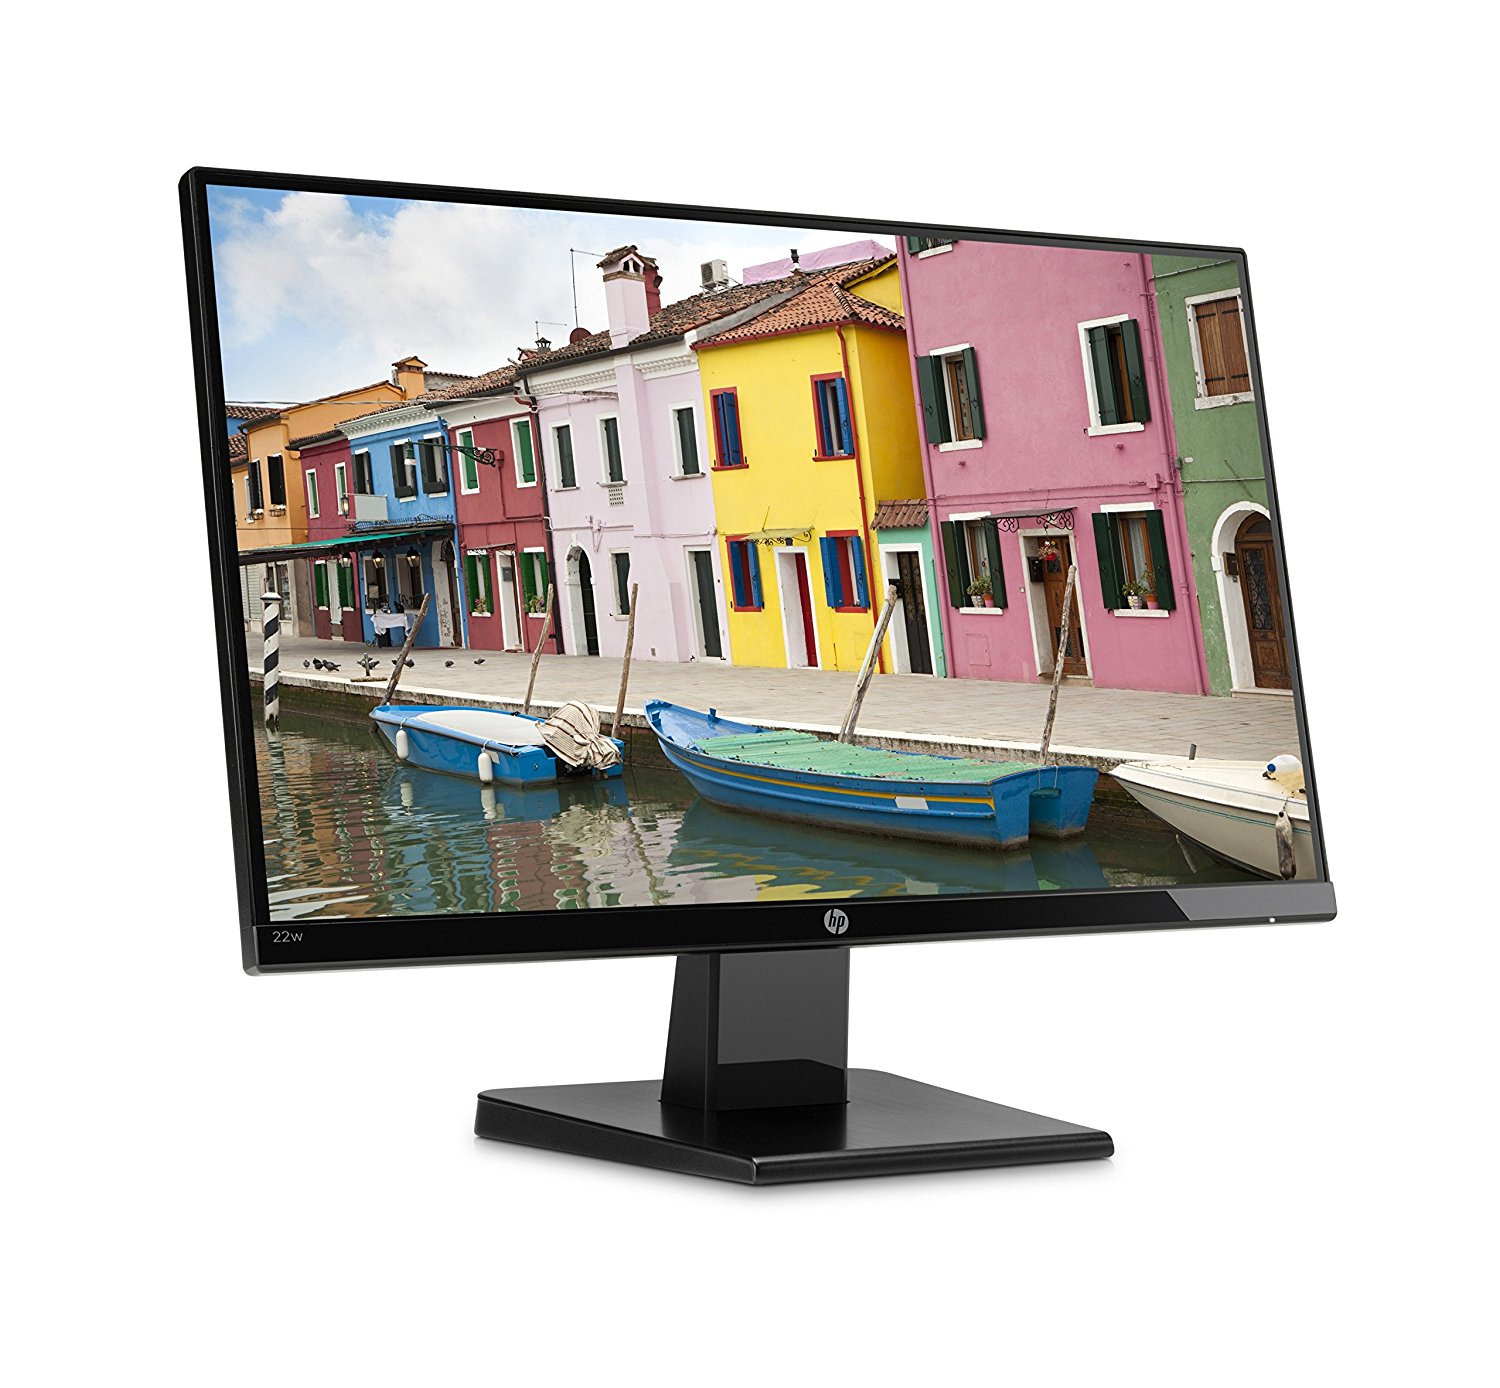 HP 22w 21.5-inch LED Monitor (Black Onyx)